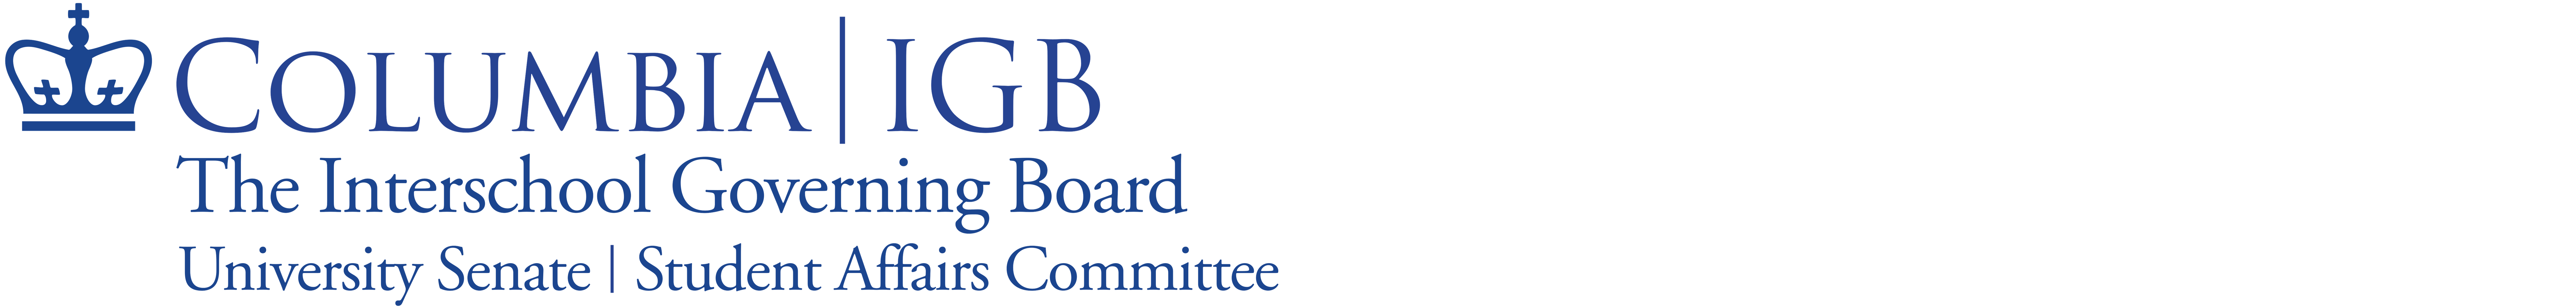 Interschool Governing Board (IGB) logo